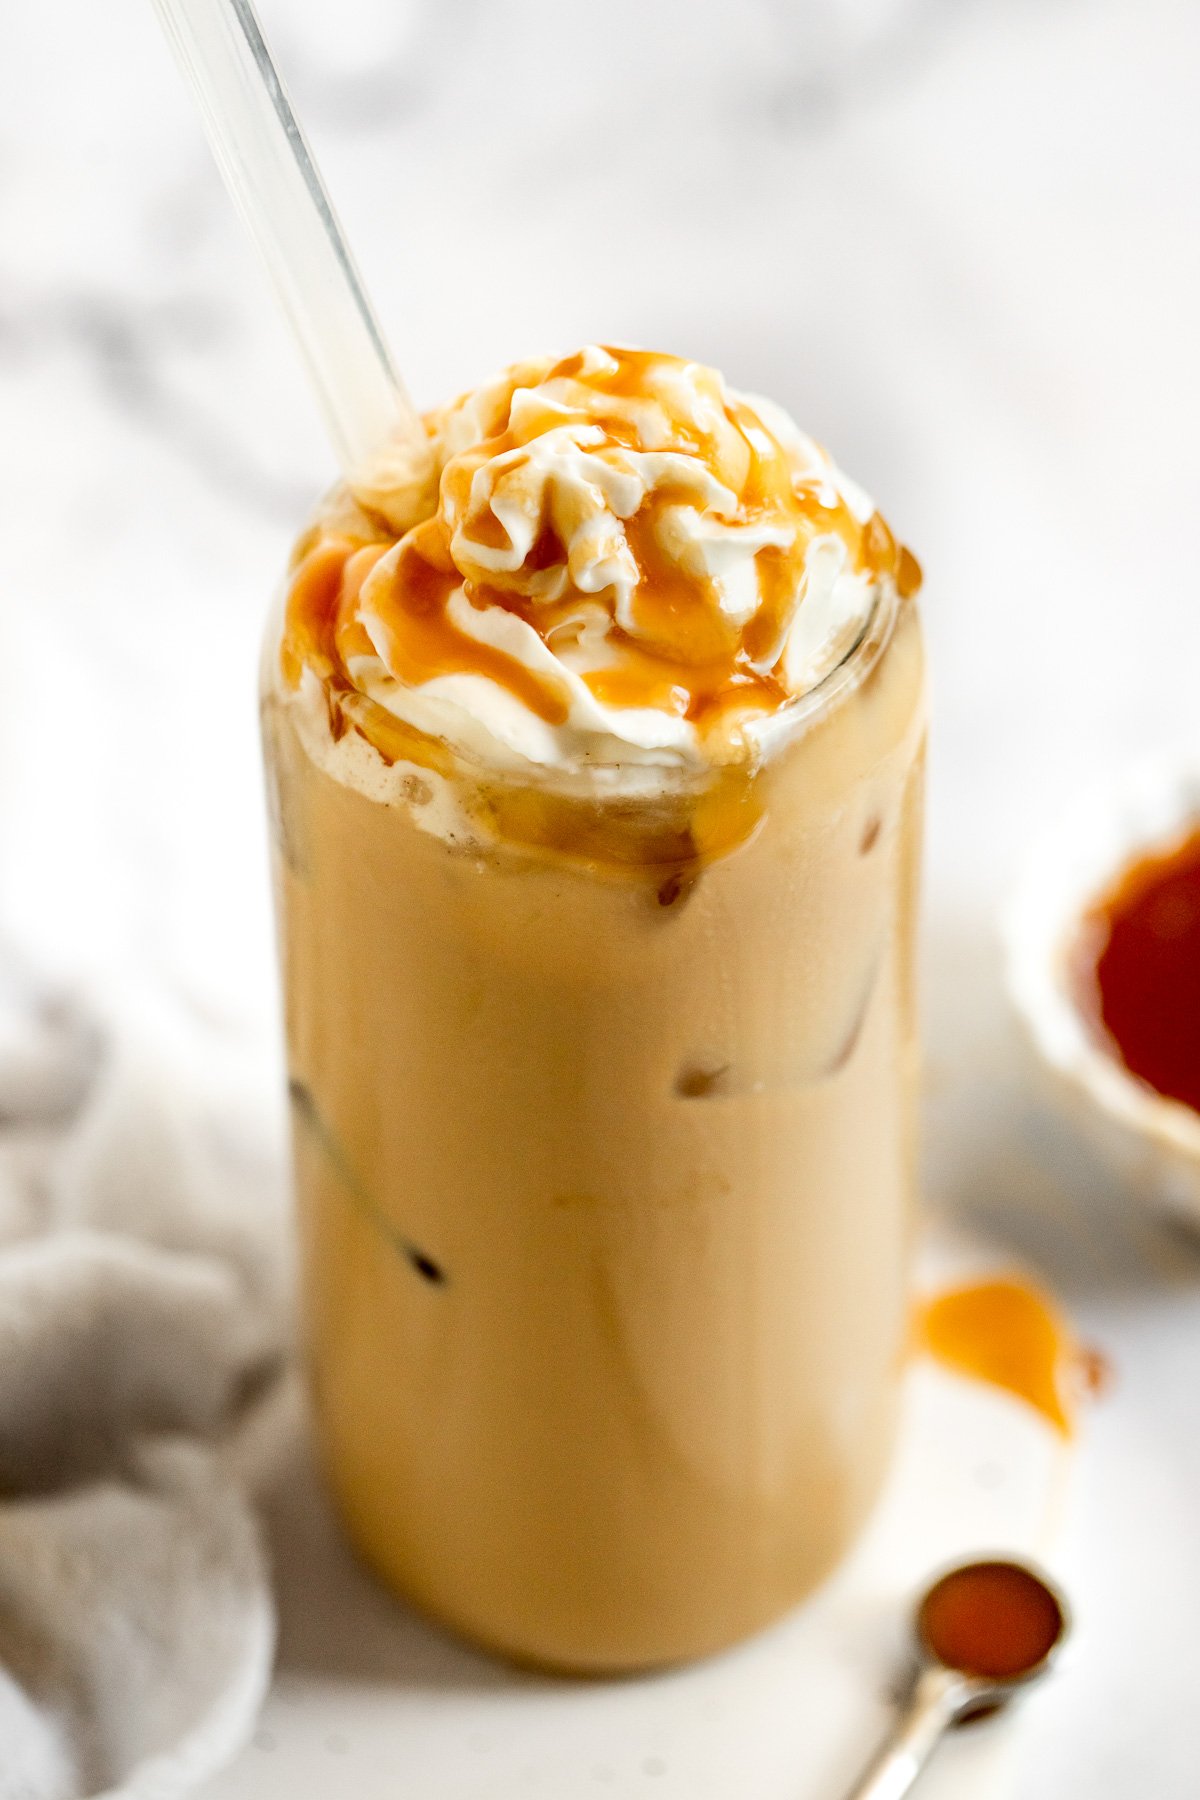 Iced Caramel Cappuccino Recipe